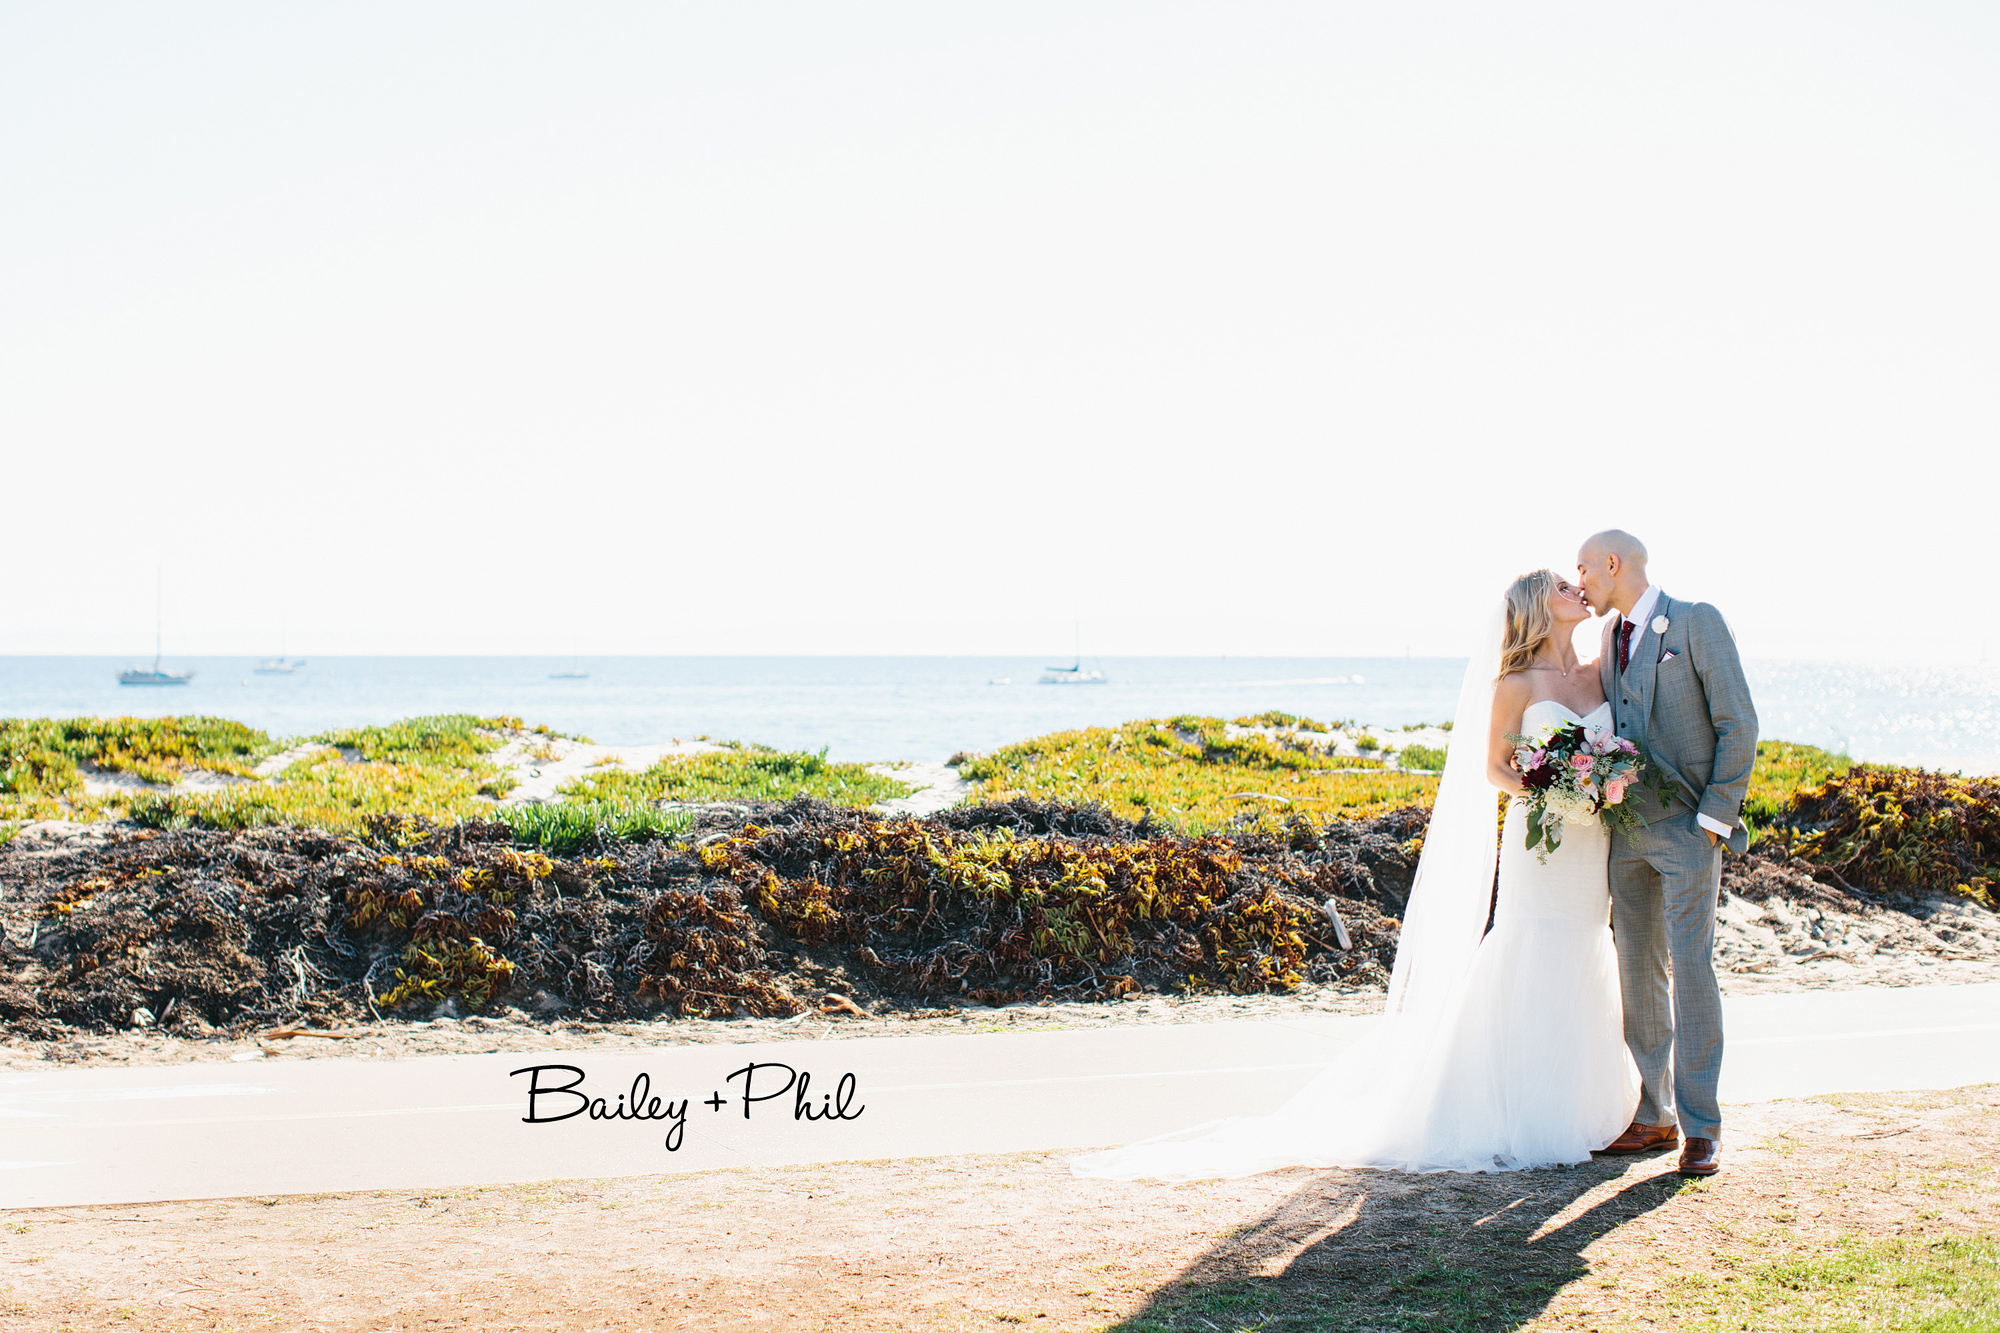 Bailey and Phil's wedding in Santa Barbara. 